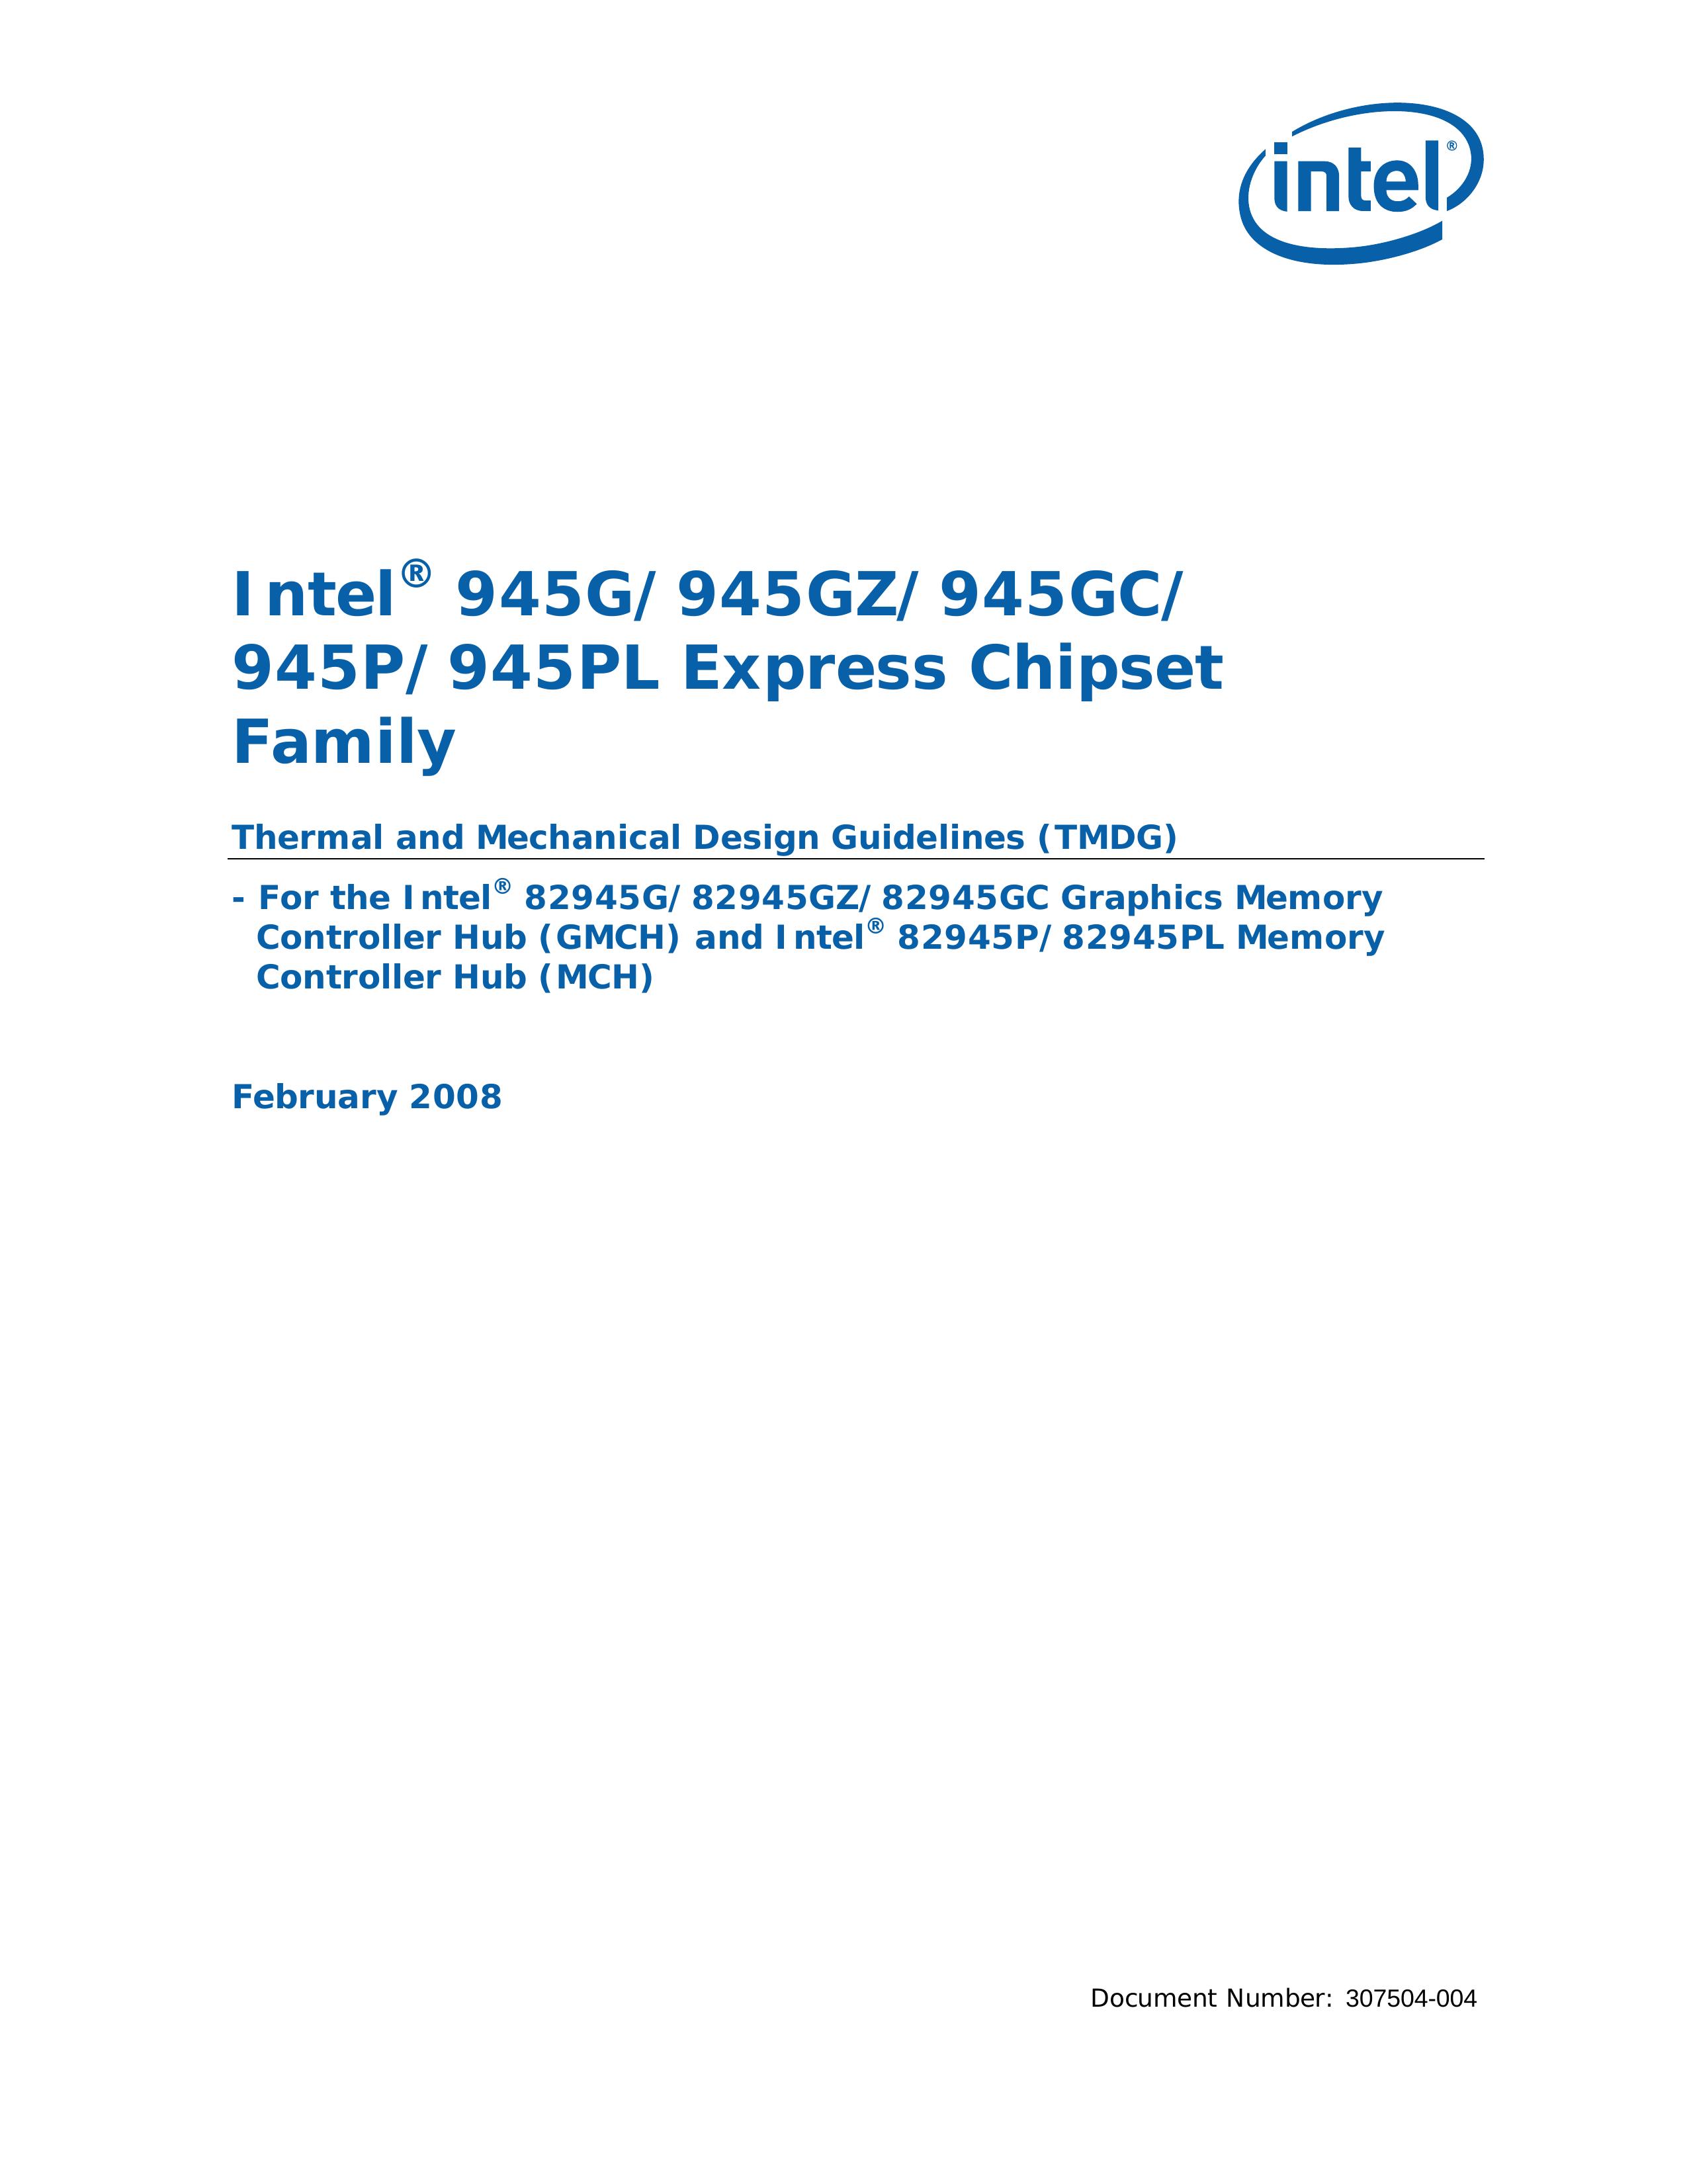 Intel 945PL Chipper User Manual